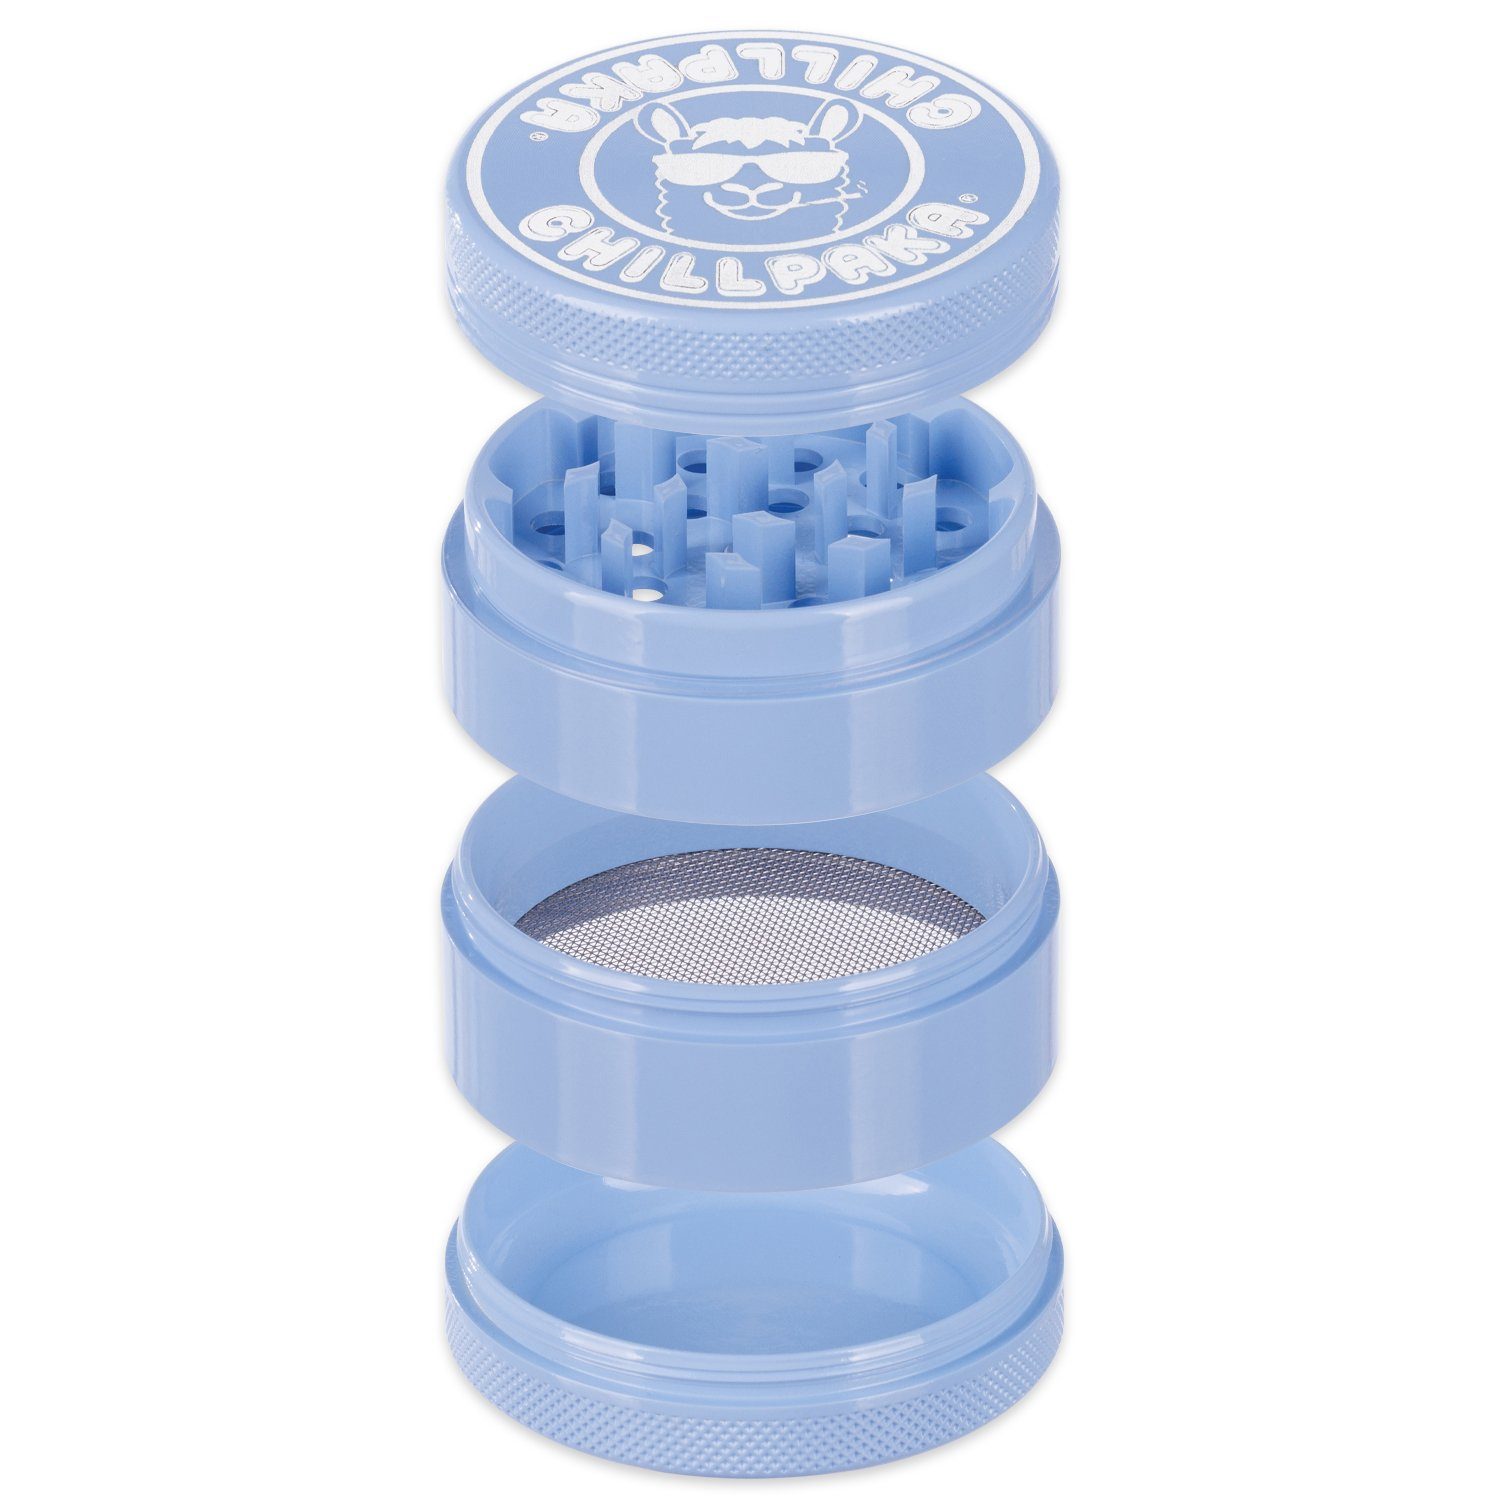 manuell Gewürzmühle Keramik CHILLPAKA ø55mm Grinder blau